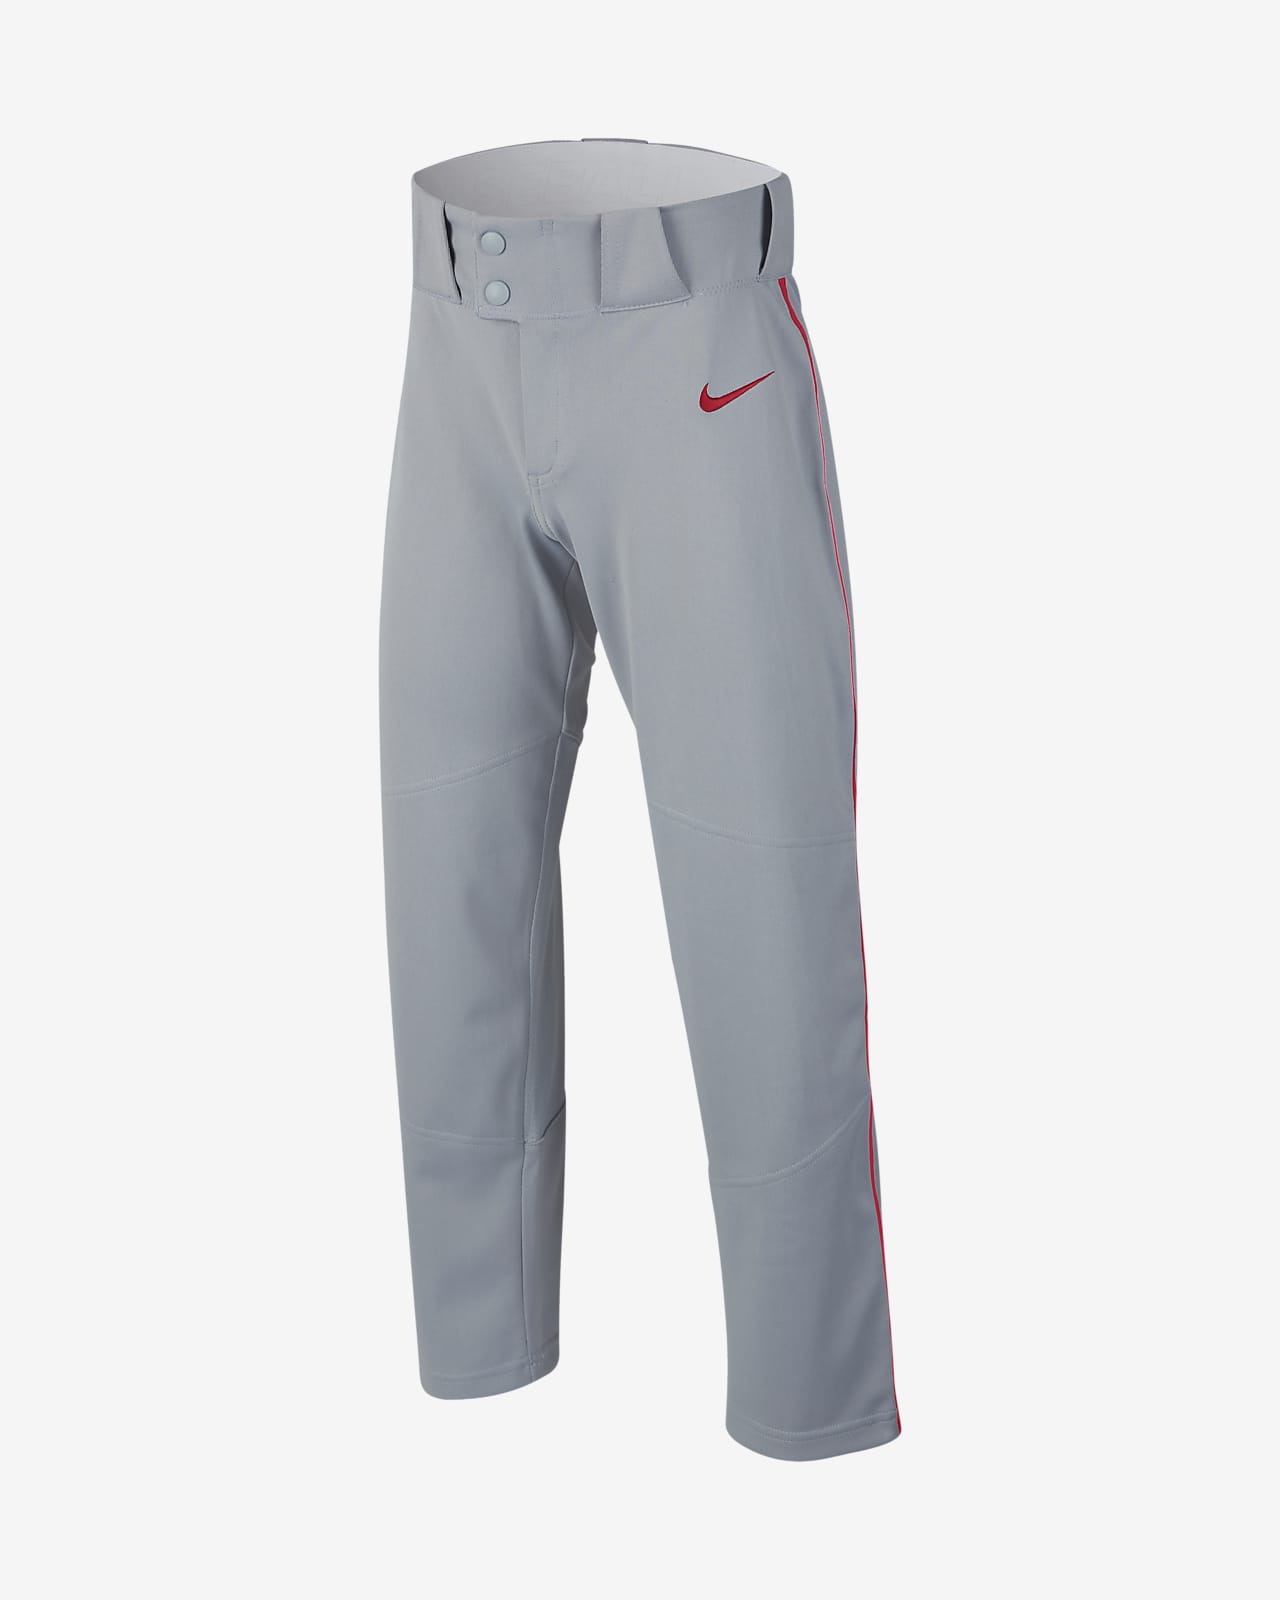 Nike Vapor Select Big Kids' (Boys') Baseball Pants